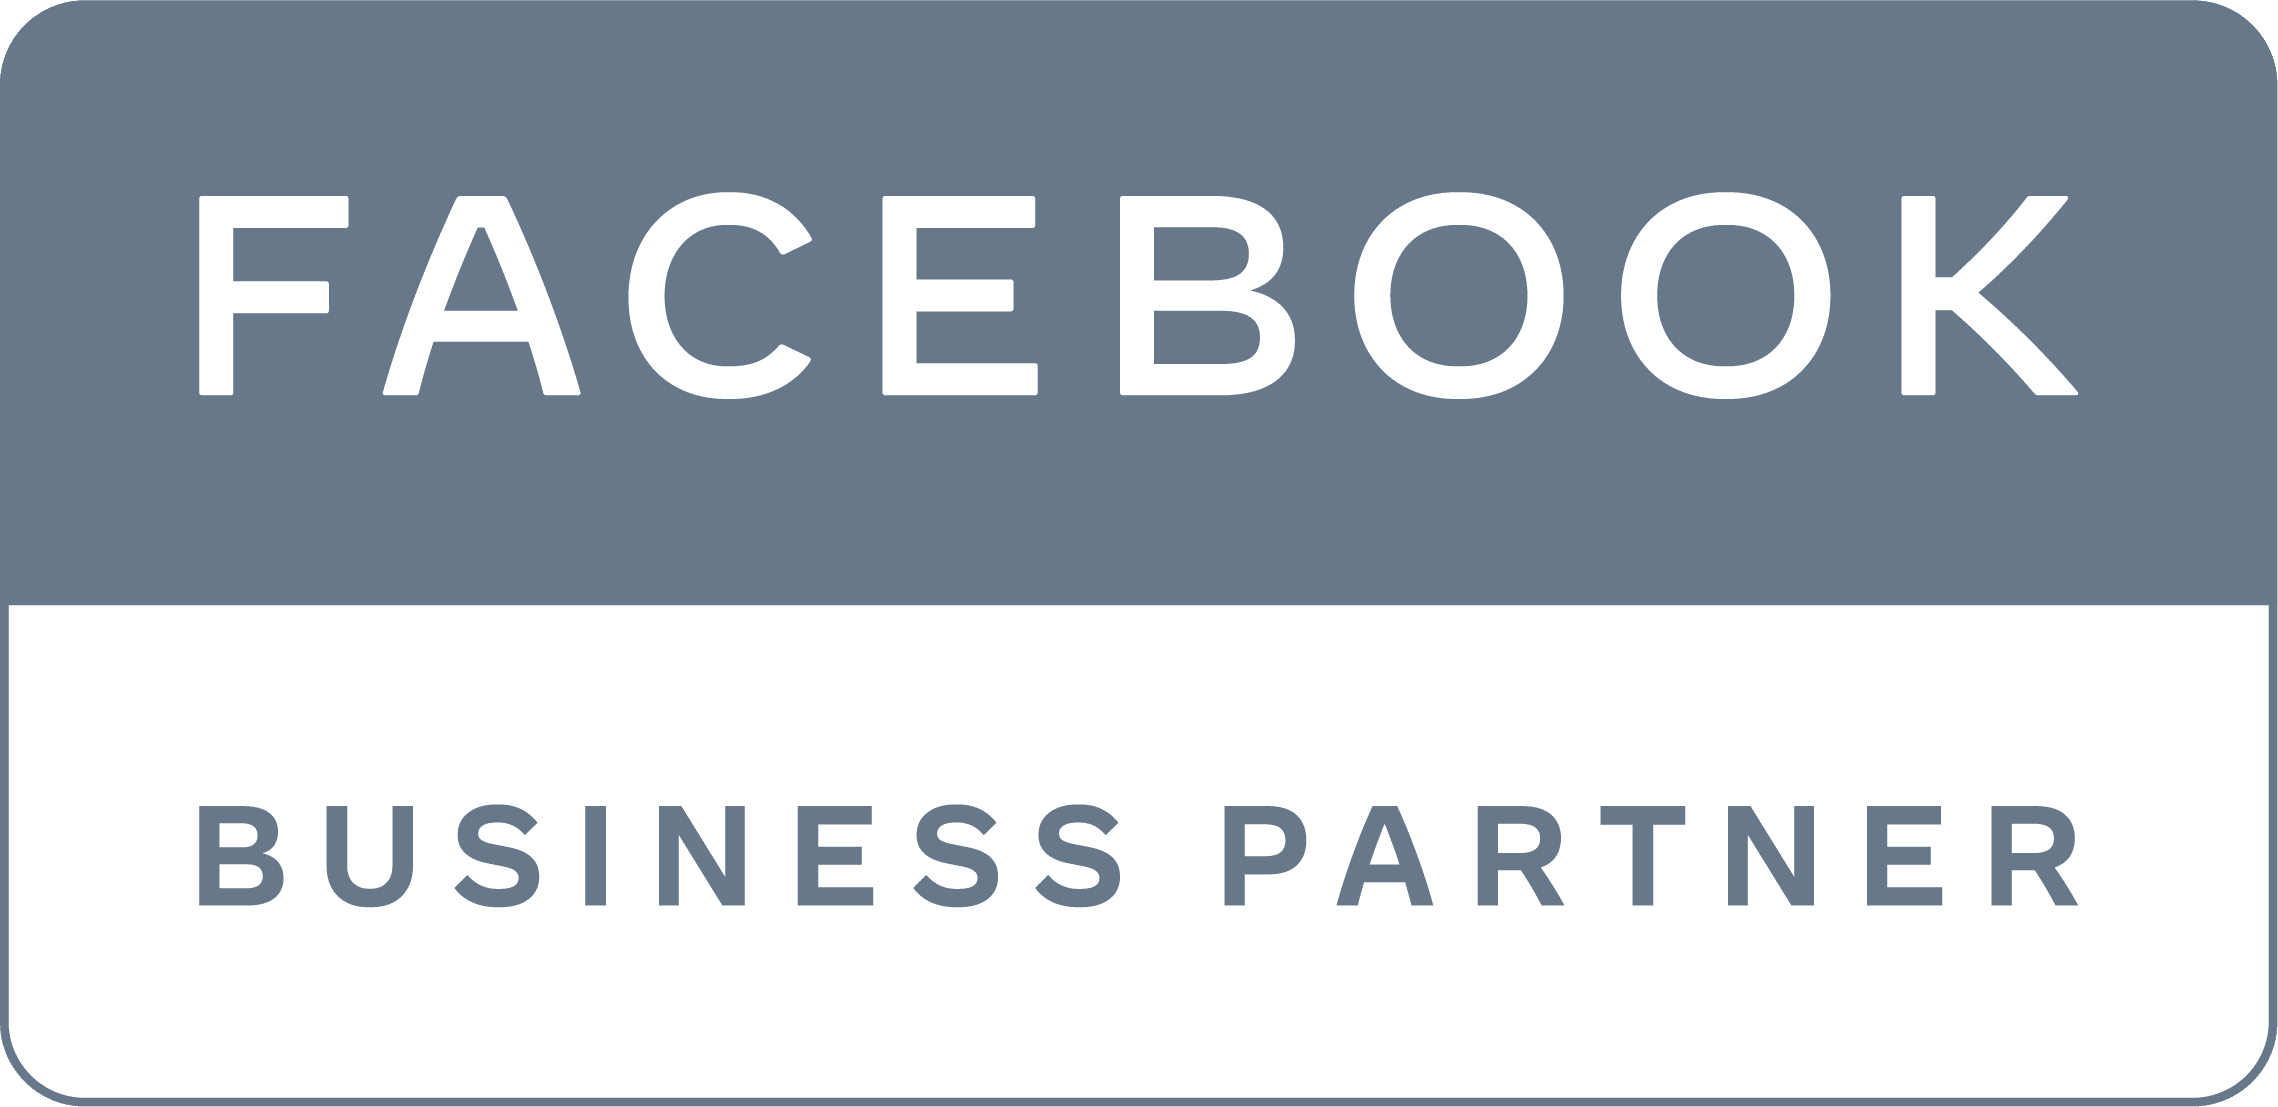 Facebook Business Partner